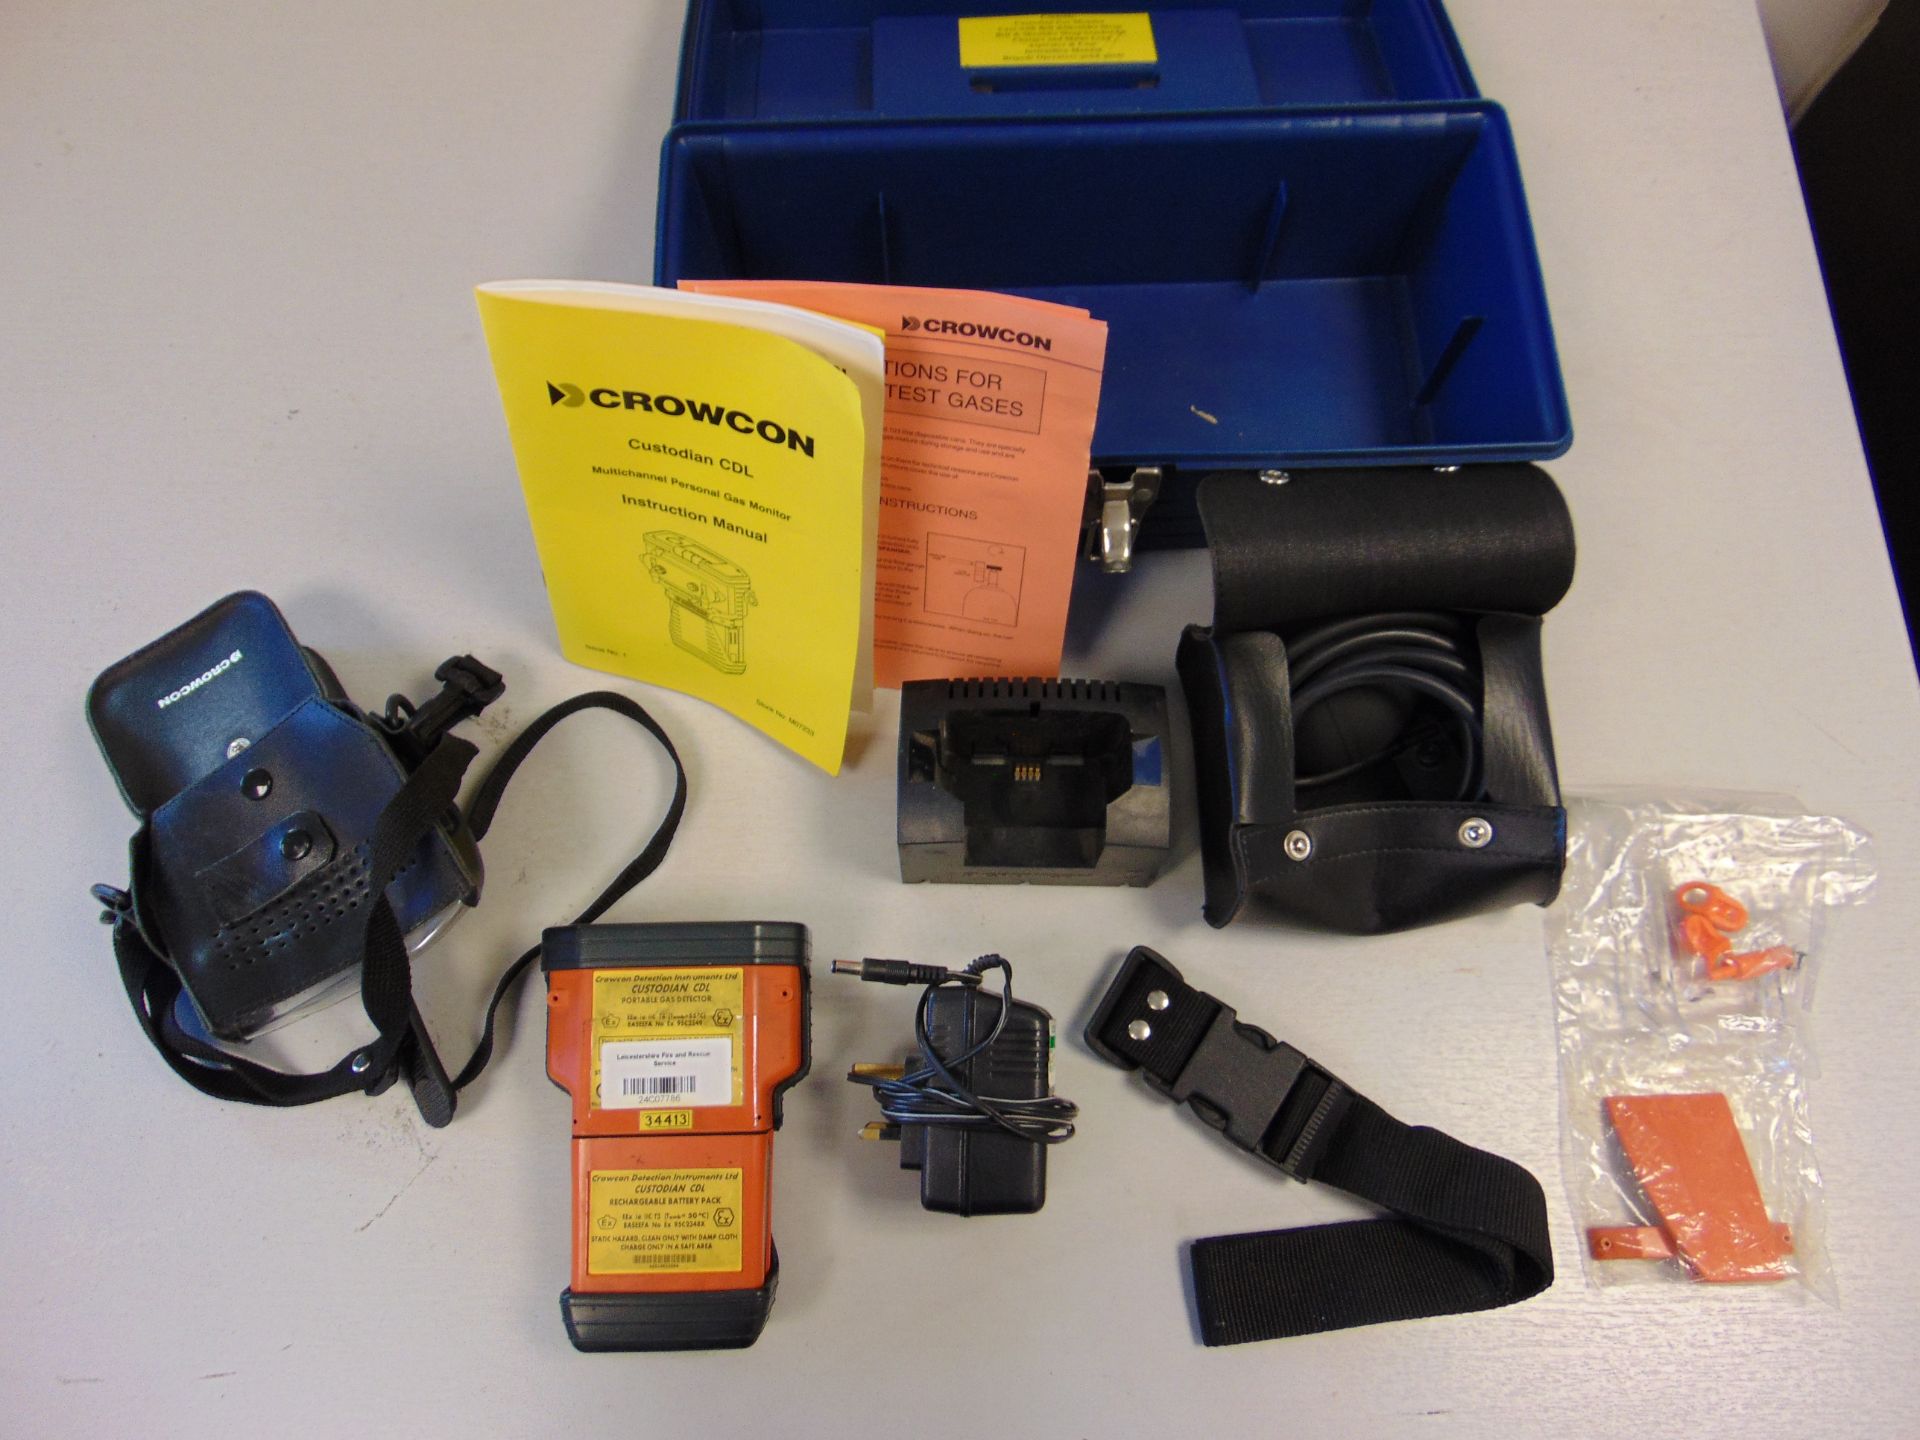 Crowcon Custodian CDL Portable Gas Monitor Kit - Image 3 of 9